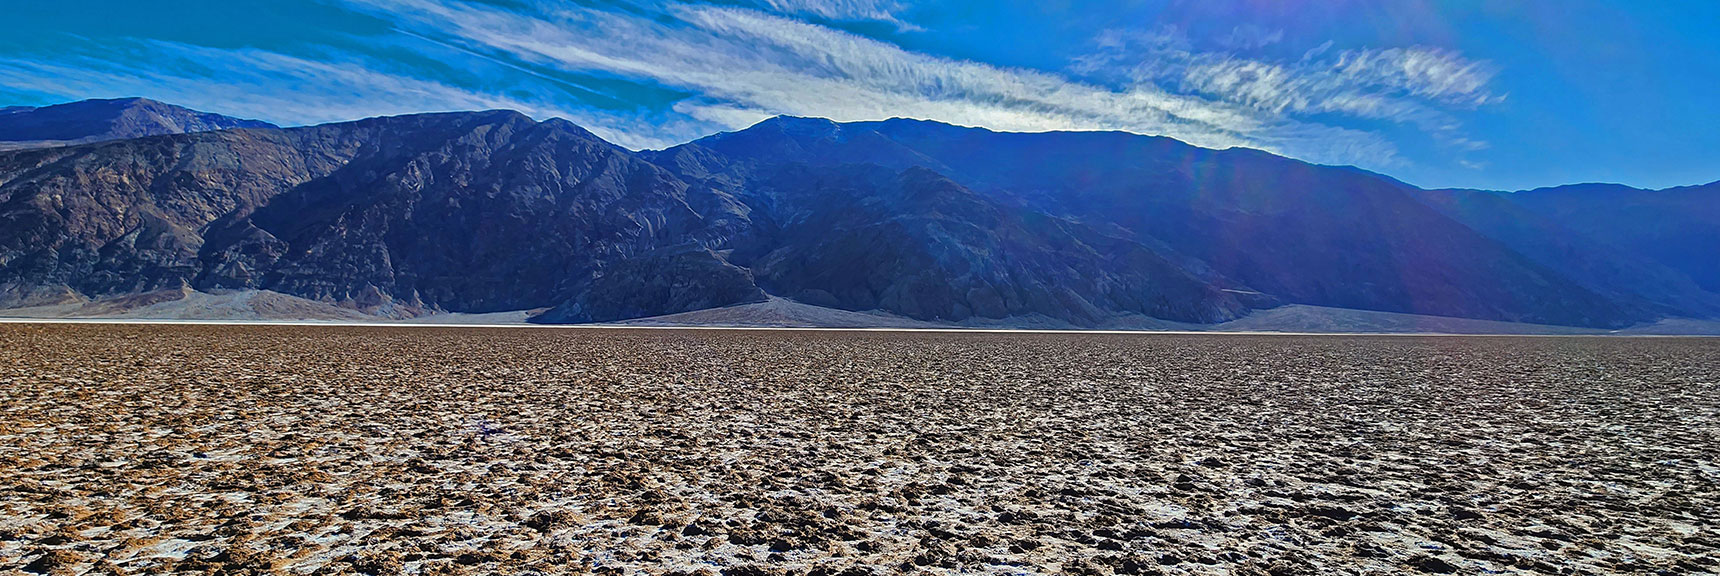 View Back Toward Black Mountains. Surface Dark, Firm, Jagged. | Death Valley Crossing | Death Valley National Park, California | David Smith | LasVegasAreaTrails.com